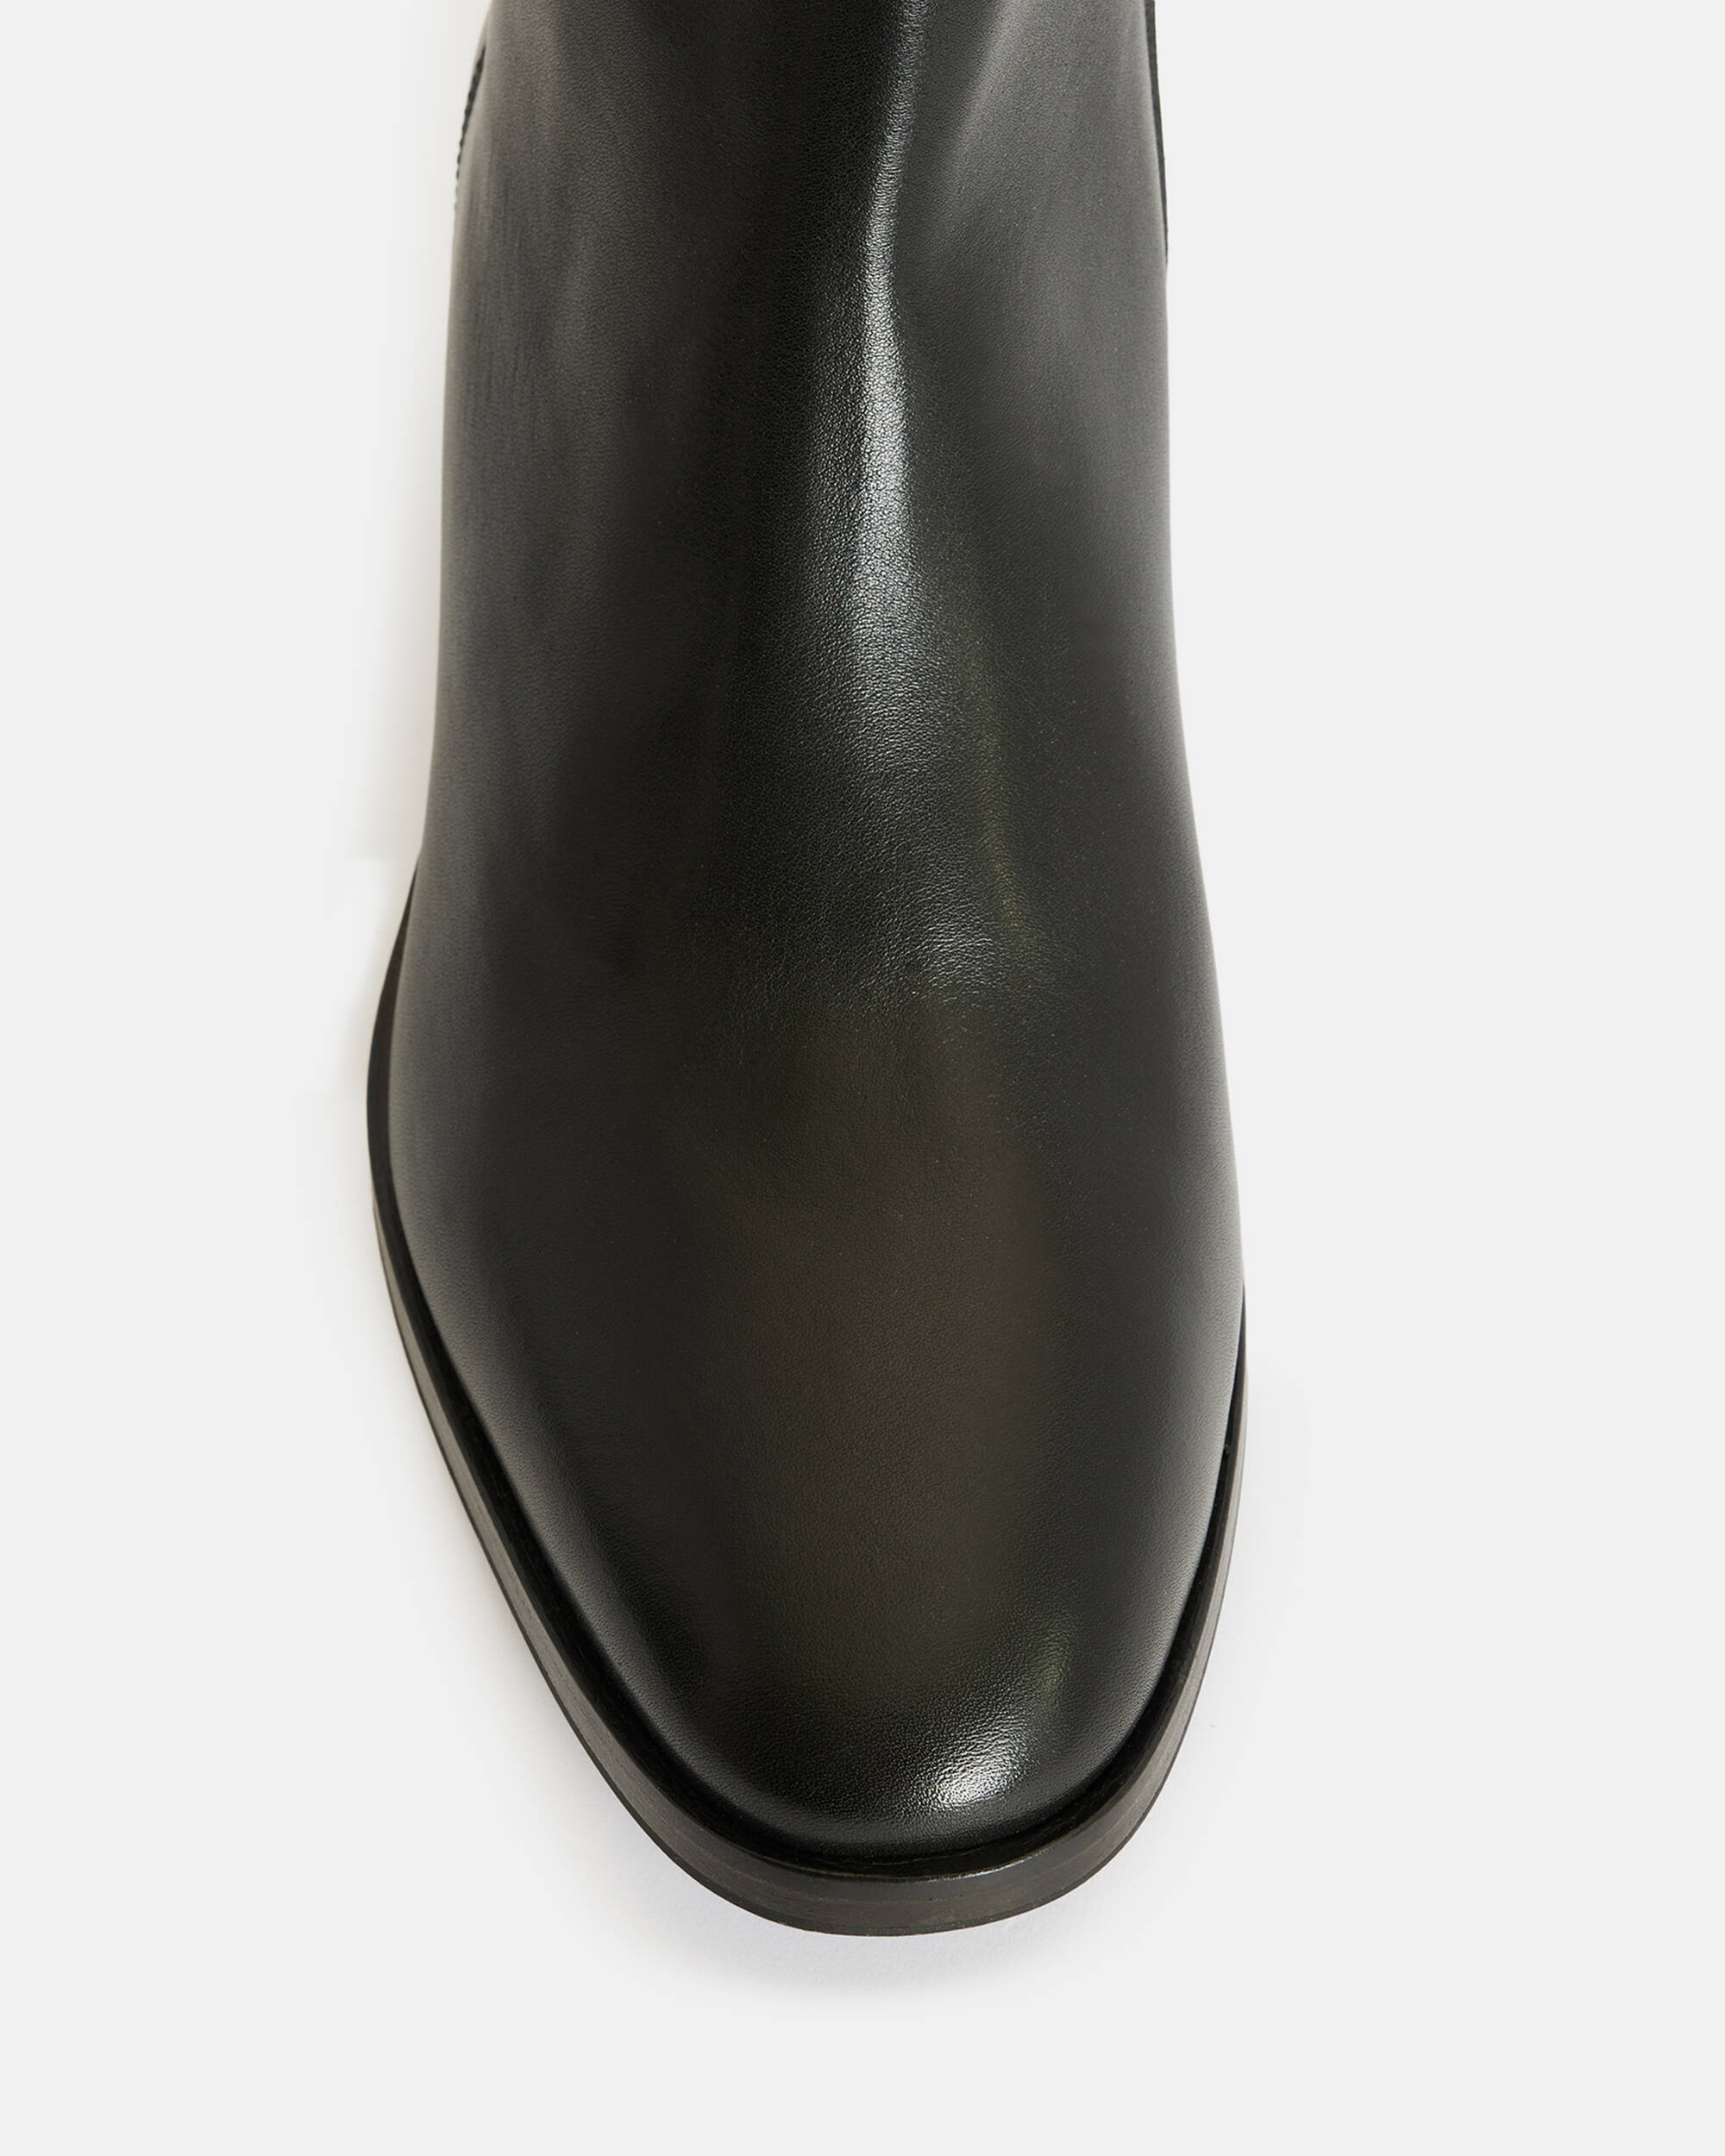 Bonham Stacked Heel Leather Boots  large image number 3